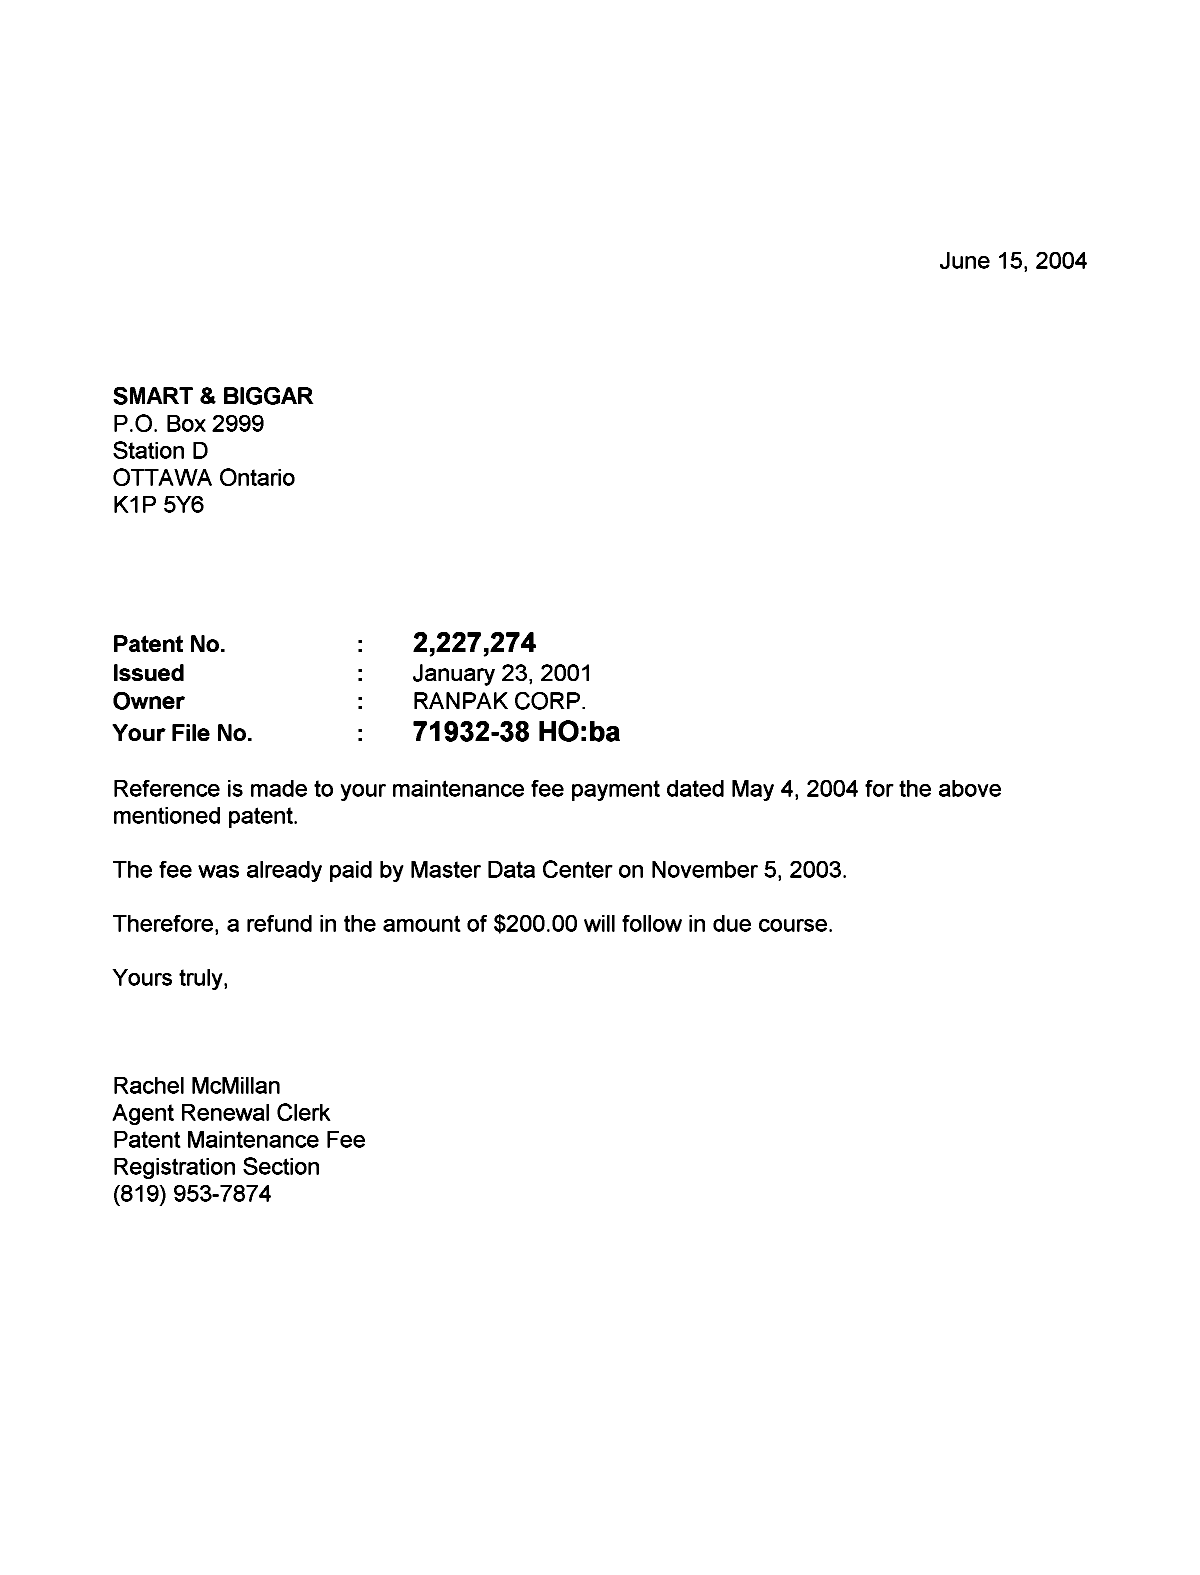 Canadian Patent Document 2227274. Correspondence 20040615. Image 1 of 1